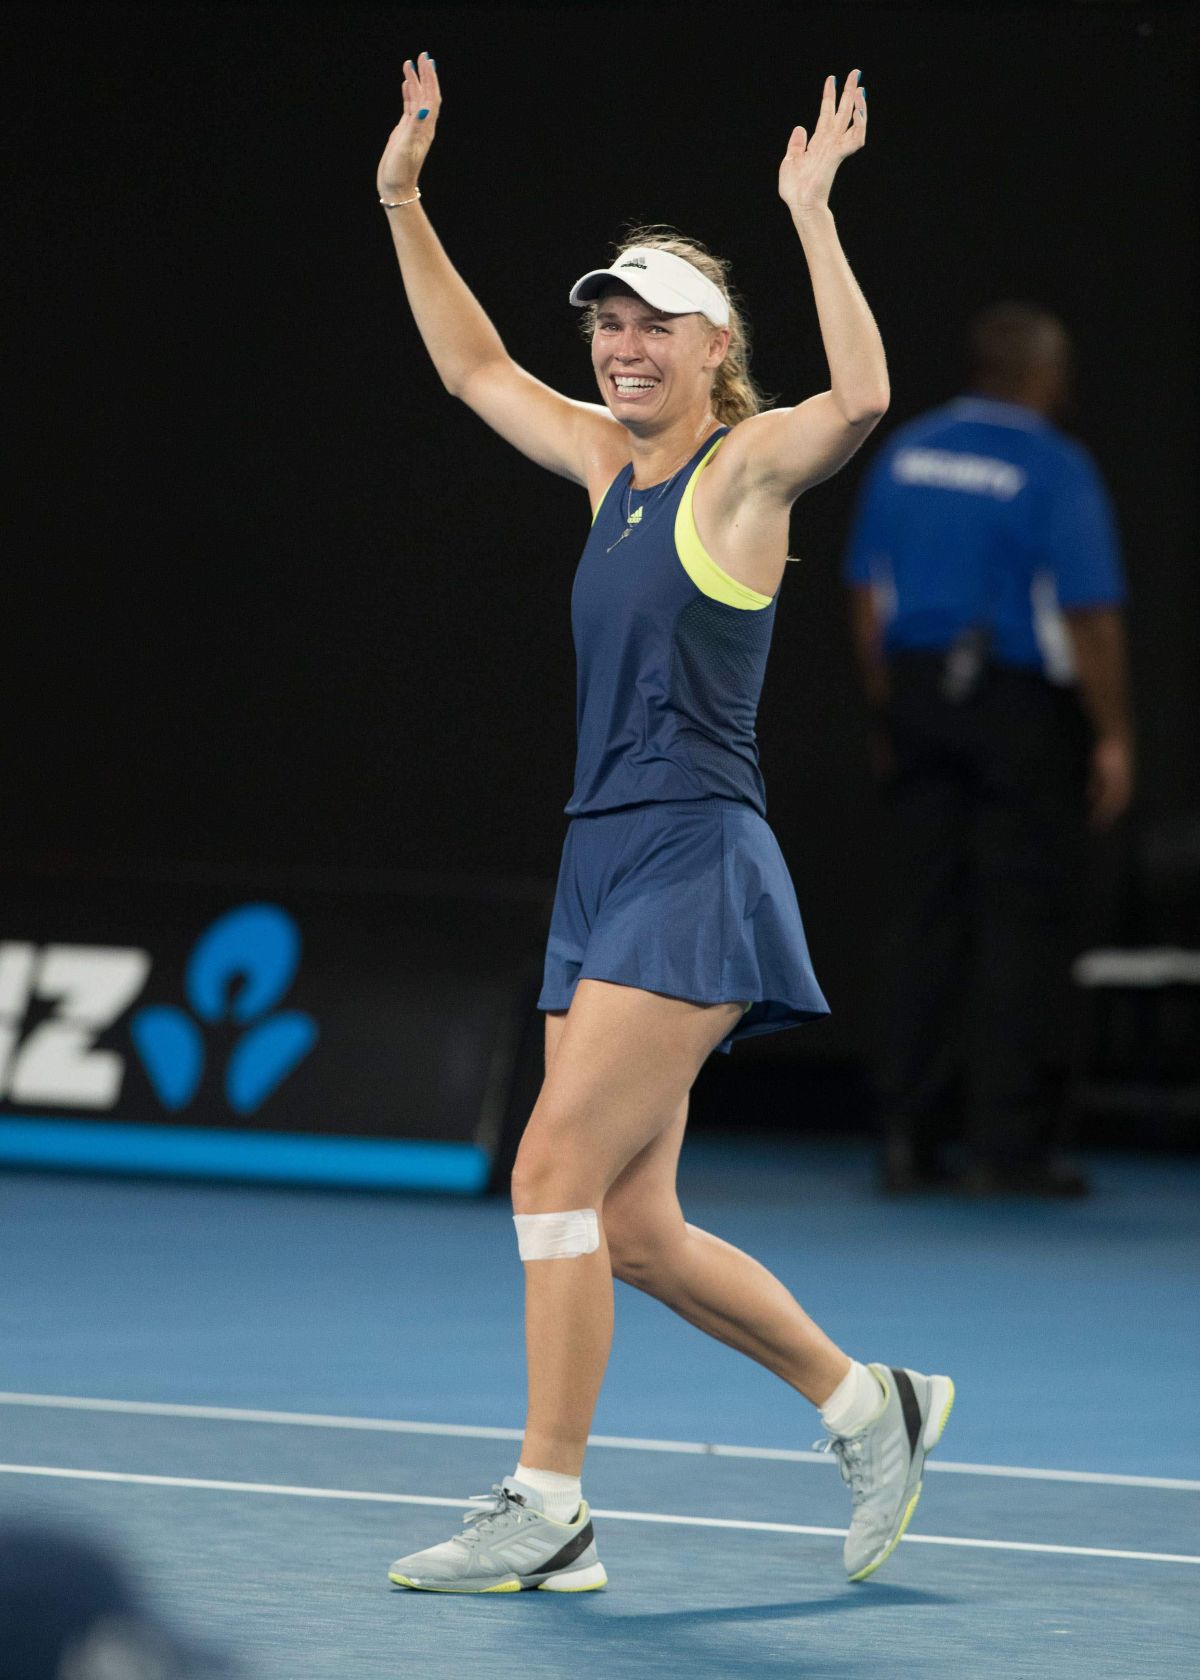 CAROLINE WOZNIACKI at Australian Open Tennis Tournament Final in Melbourne 01/27/2018 ...1200 x 1680